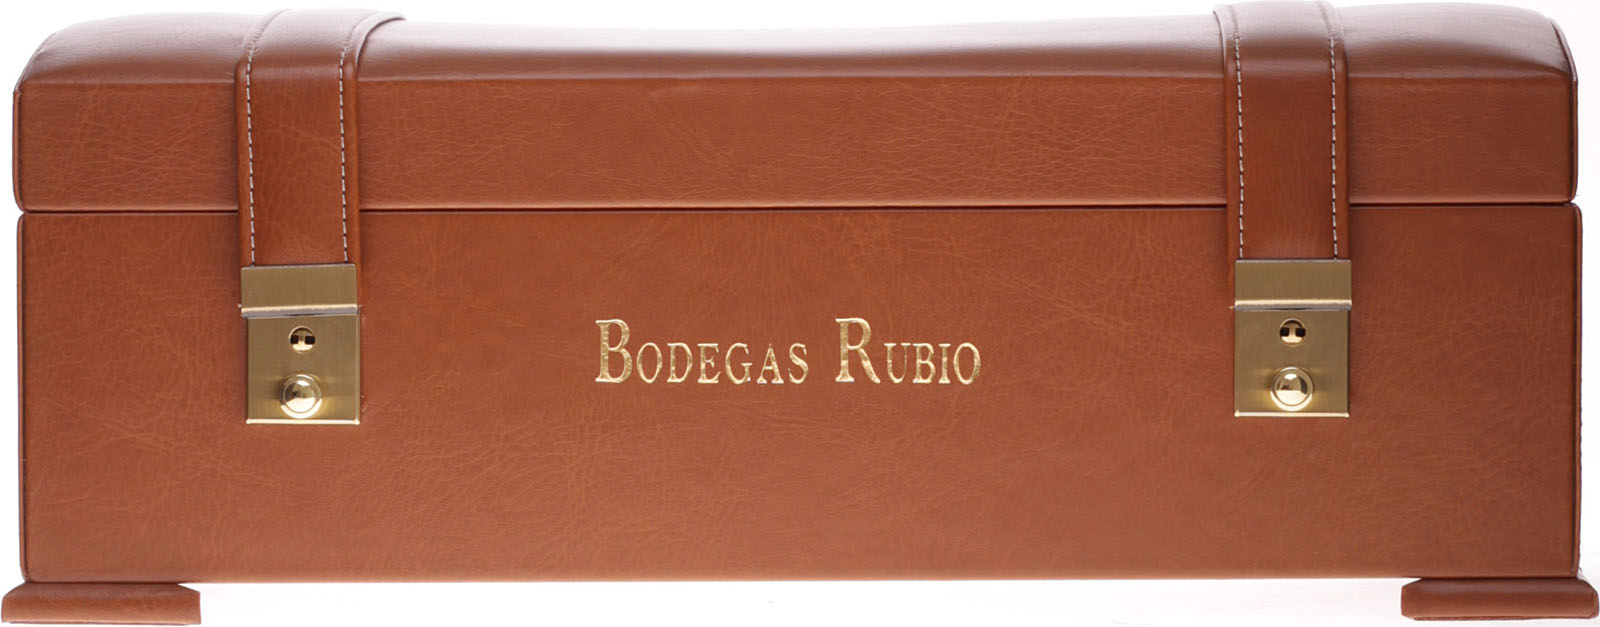 Rey Luis Felipe Brandy Gran Reserva 75 Anos, Bodegas Rubio, (1 x